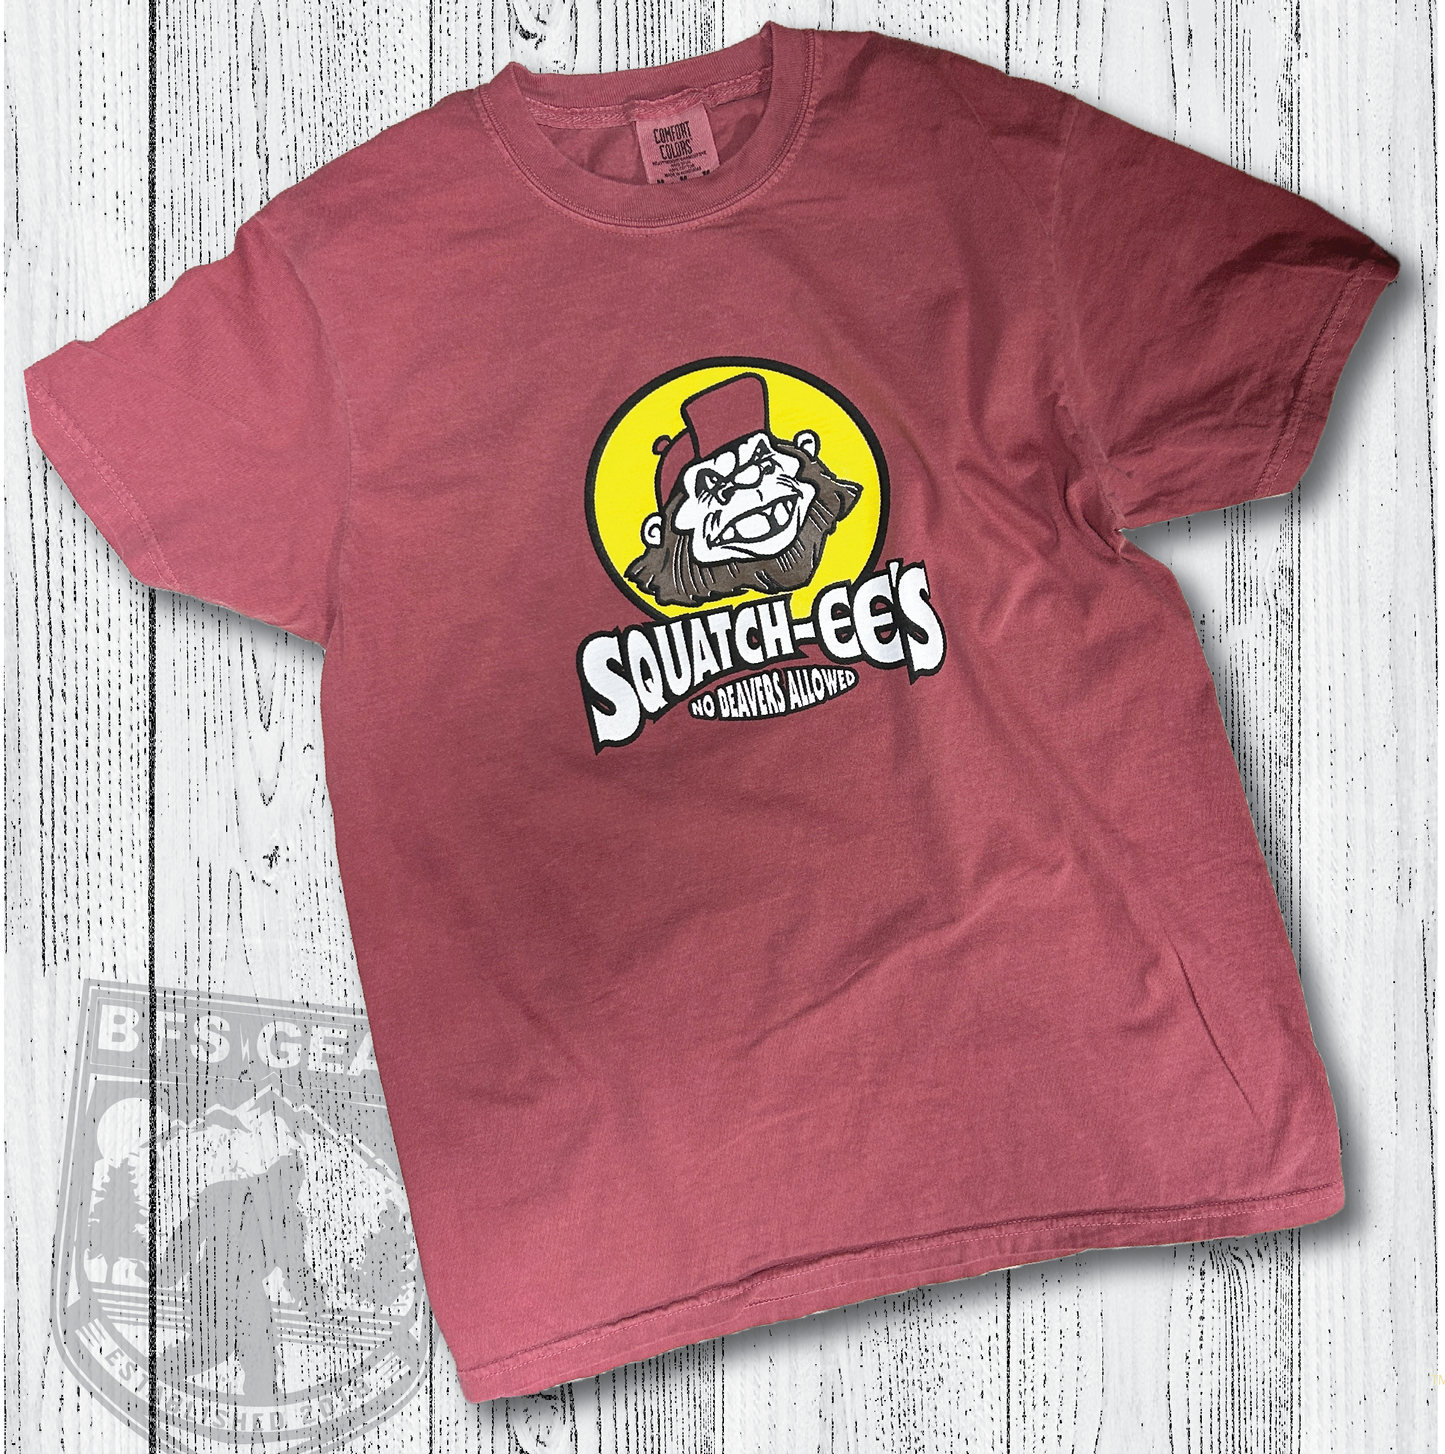 Squatch-ee's T-Shirt